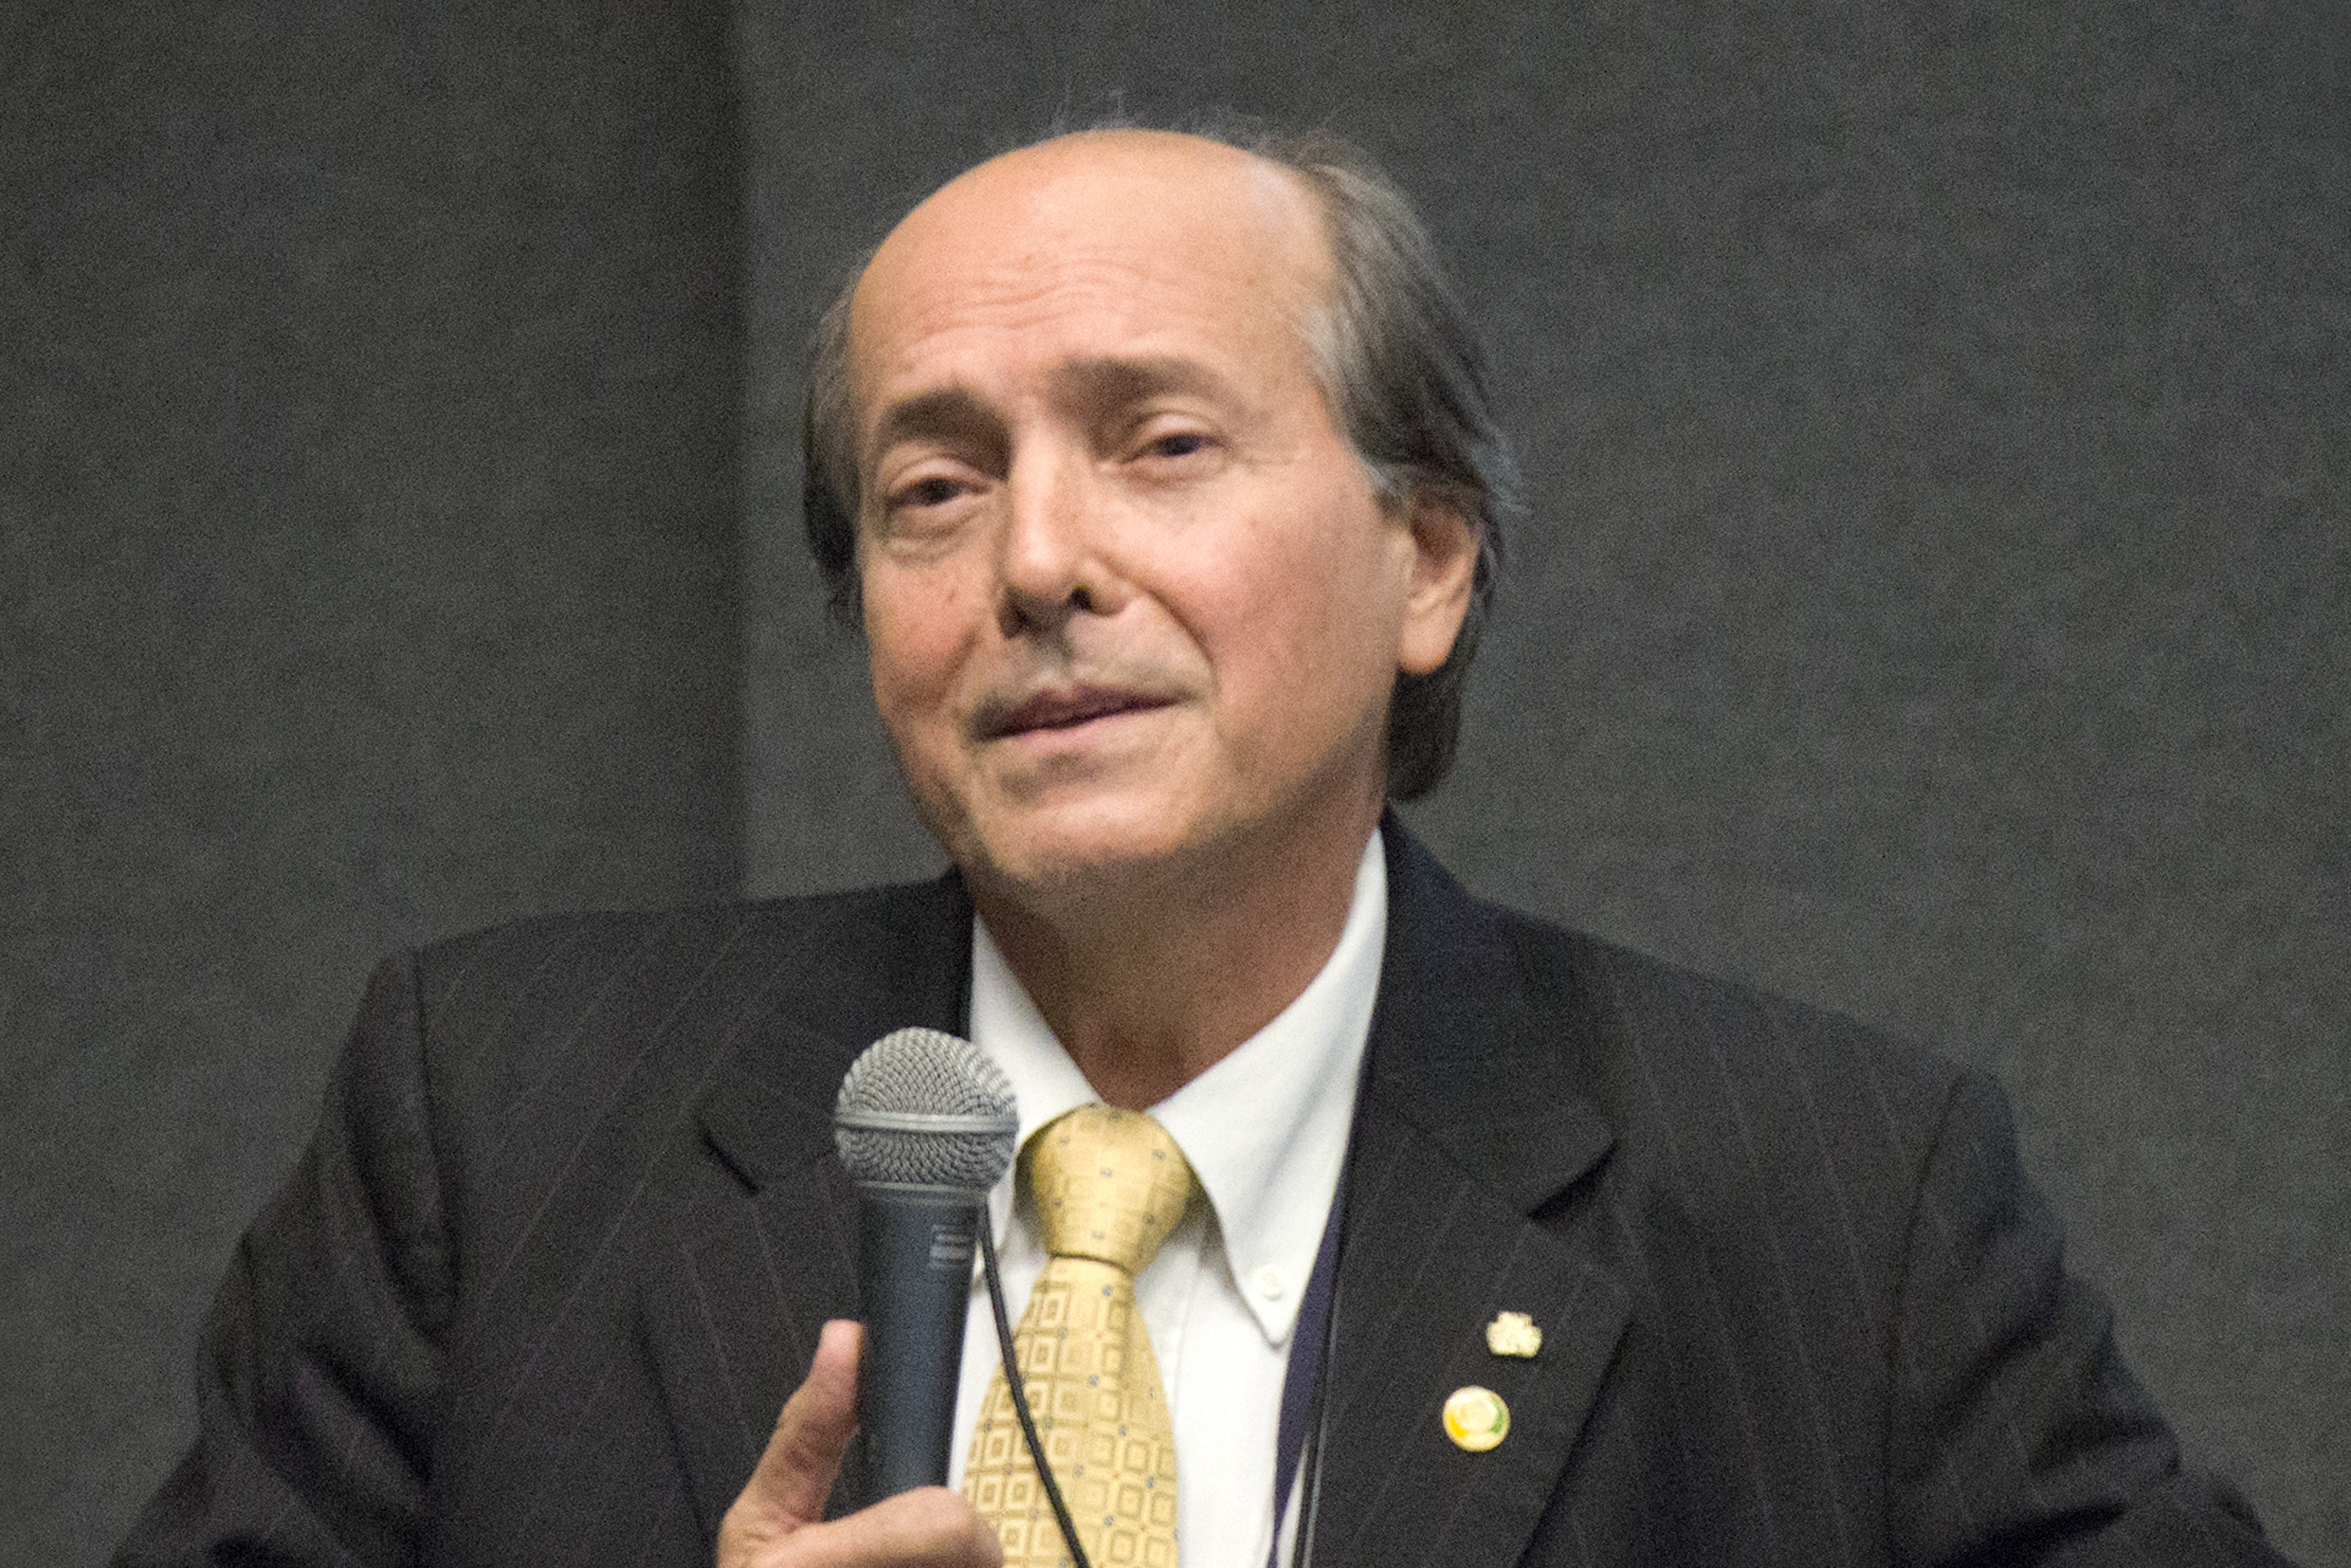 Naomar de Almeida Filho at the debate "The Future of the Universities" - April 24, 2015